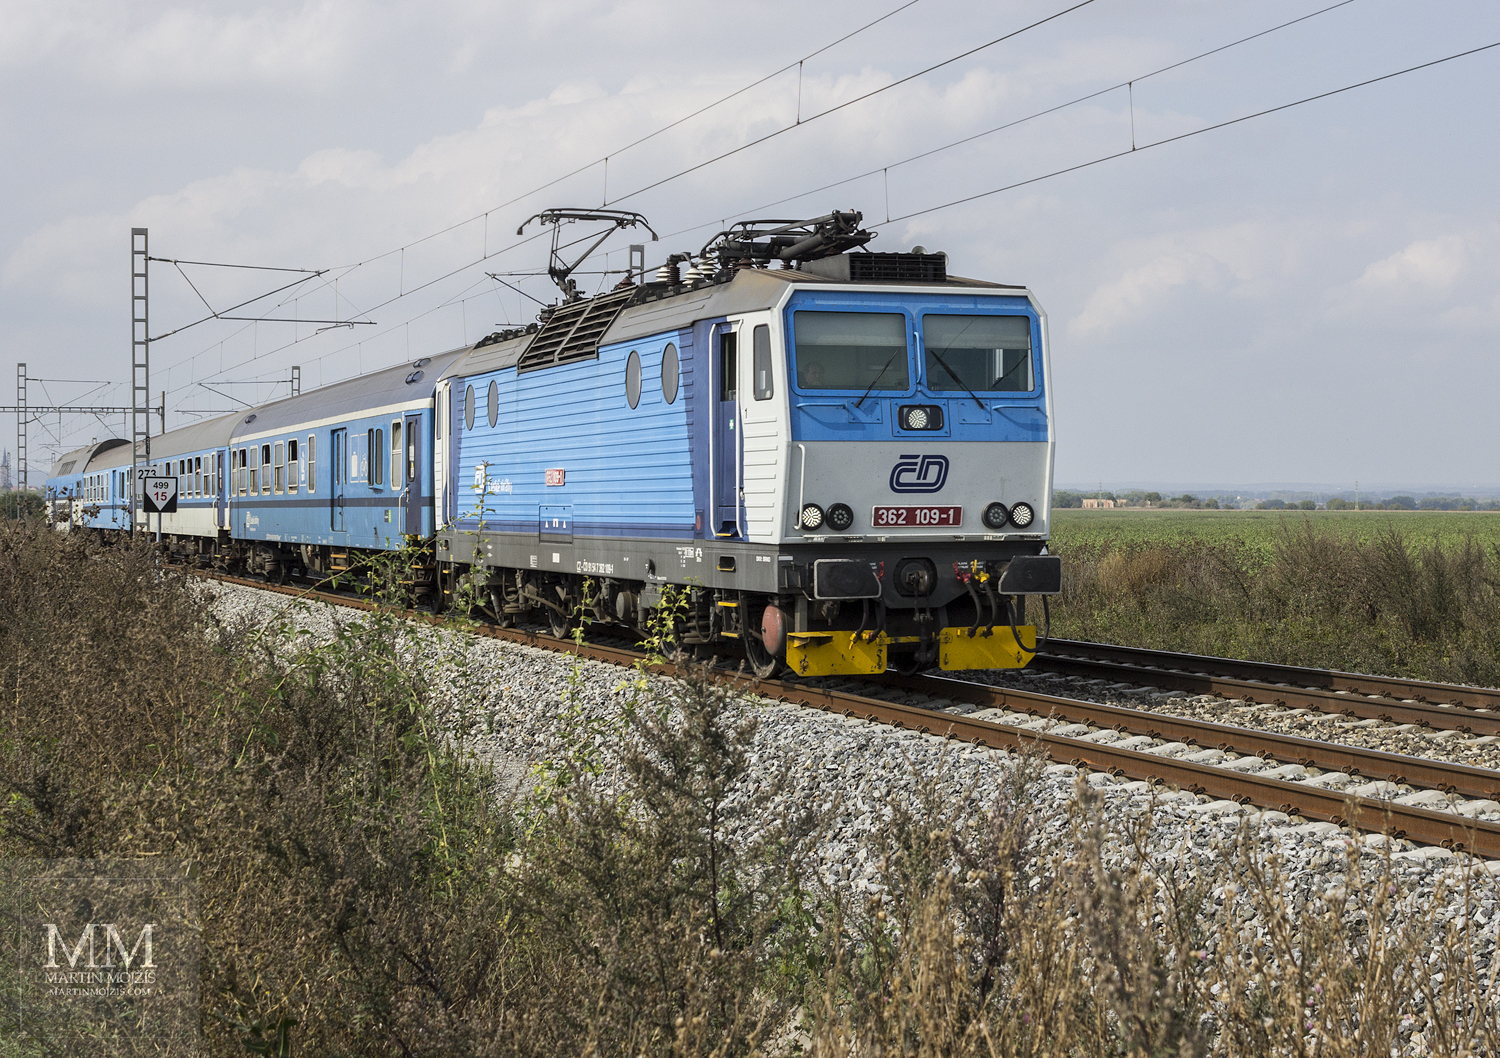 Photograph of passenger train in head with locomotive Skoda 362.